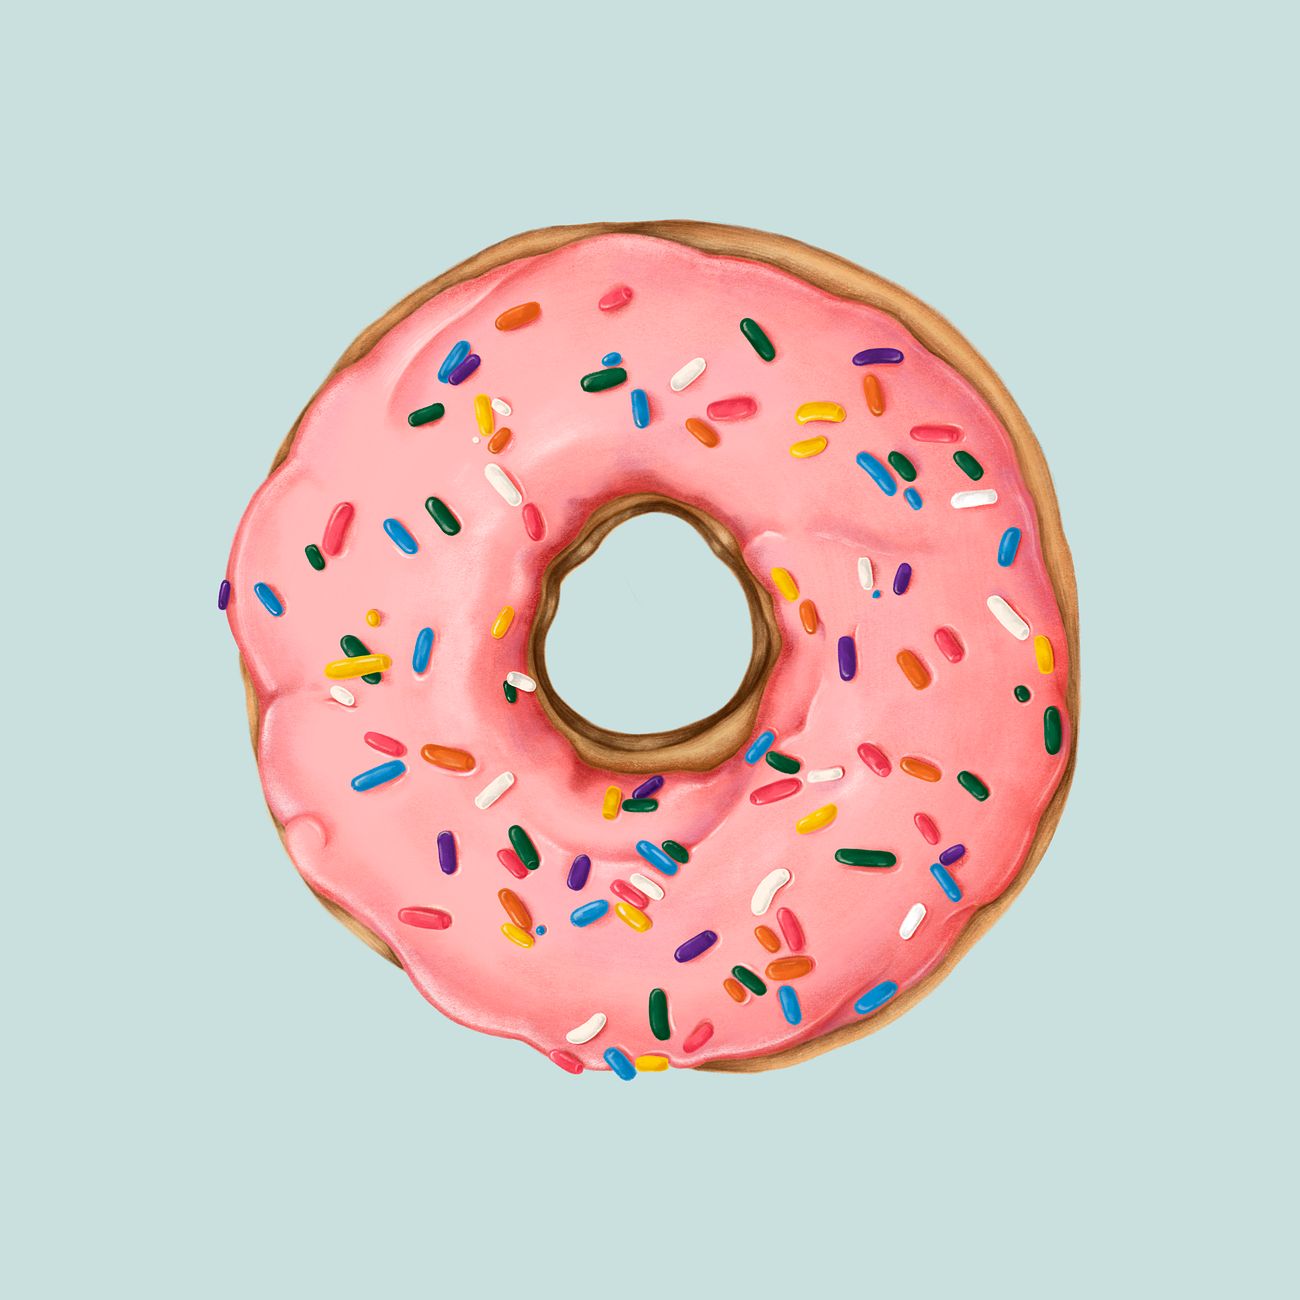 Download Pink donut template | Free illustration - 2048583